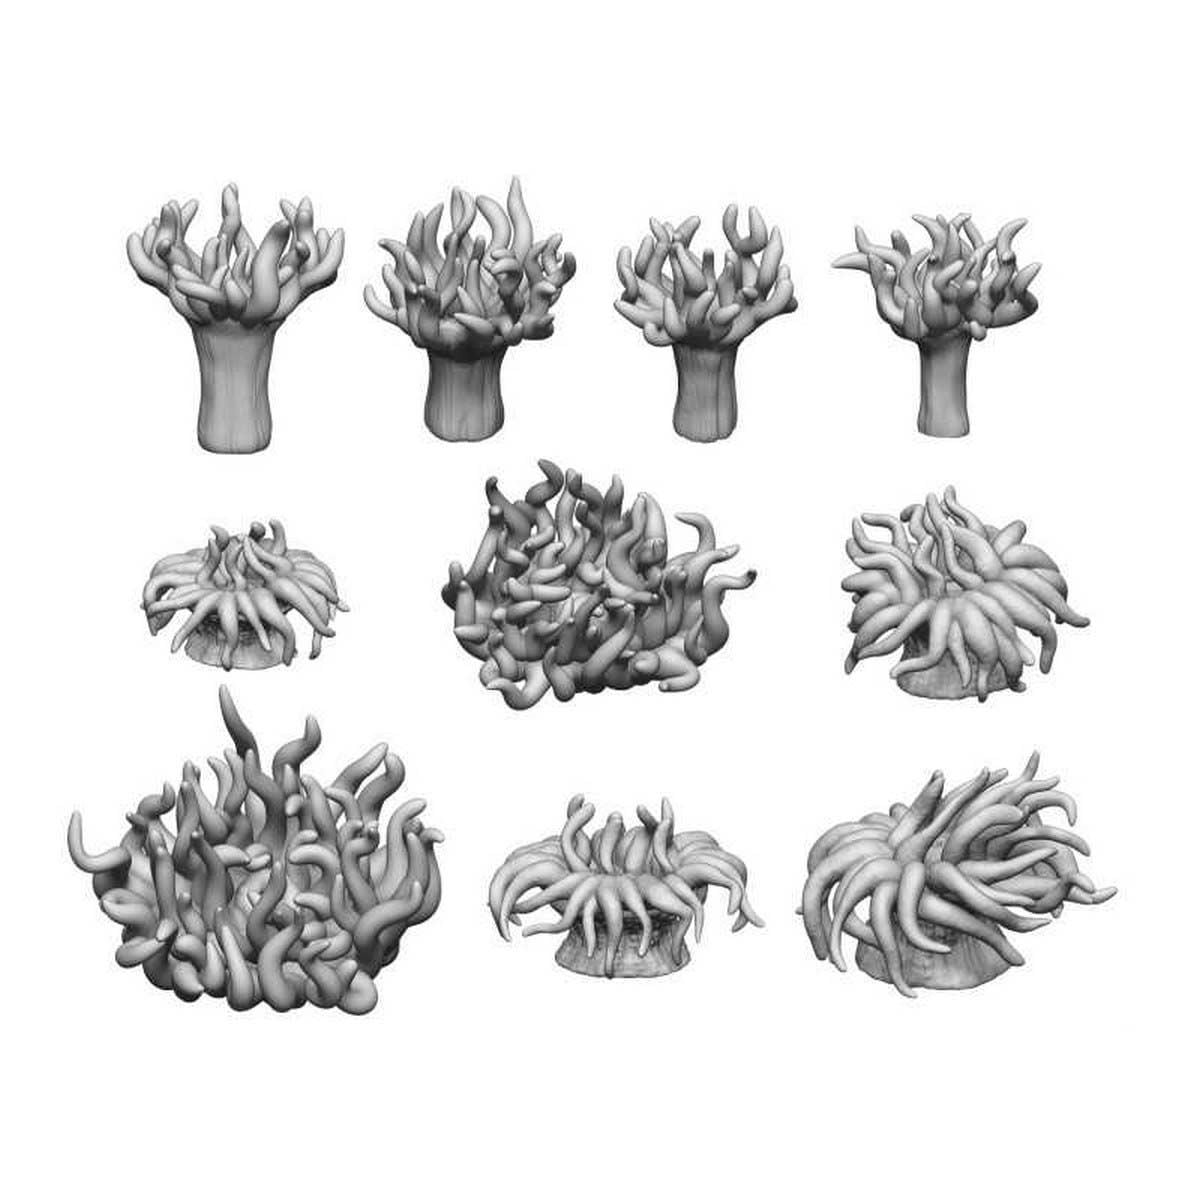 3D Printed Set - Sea Anemones